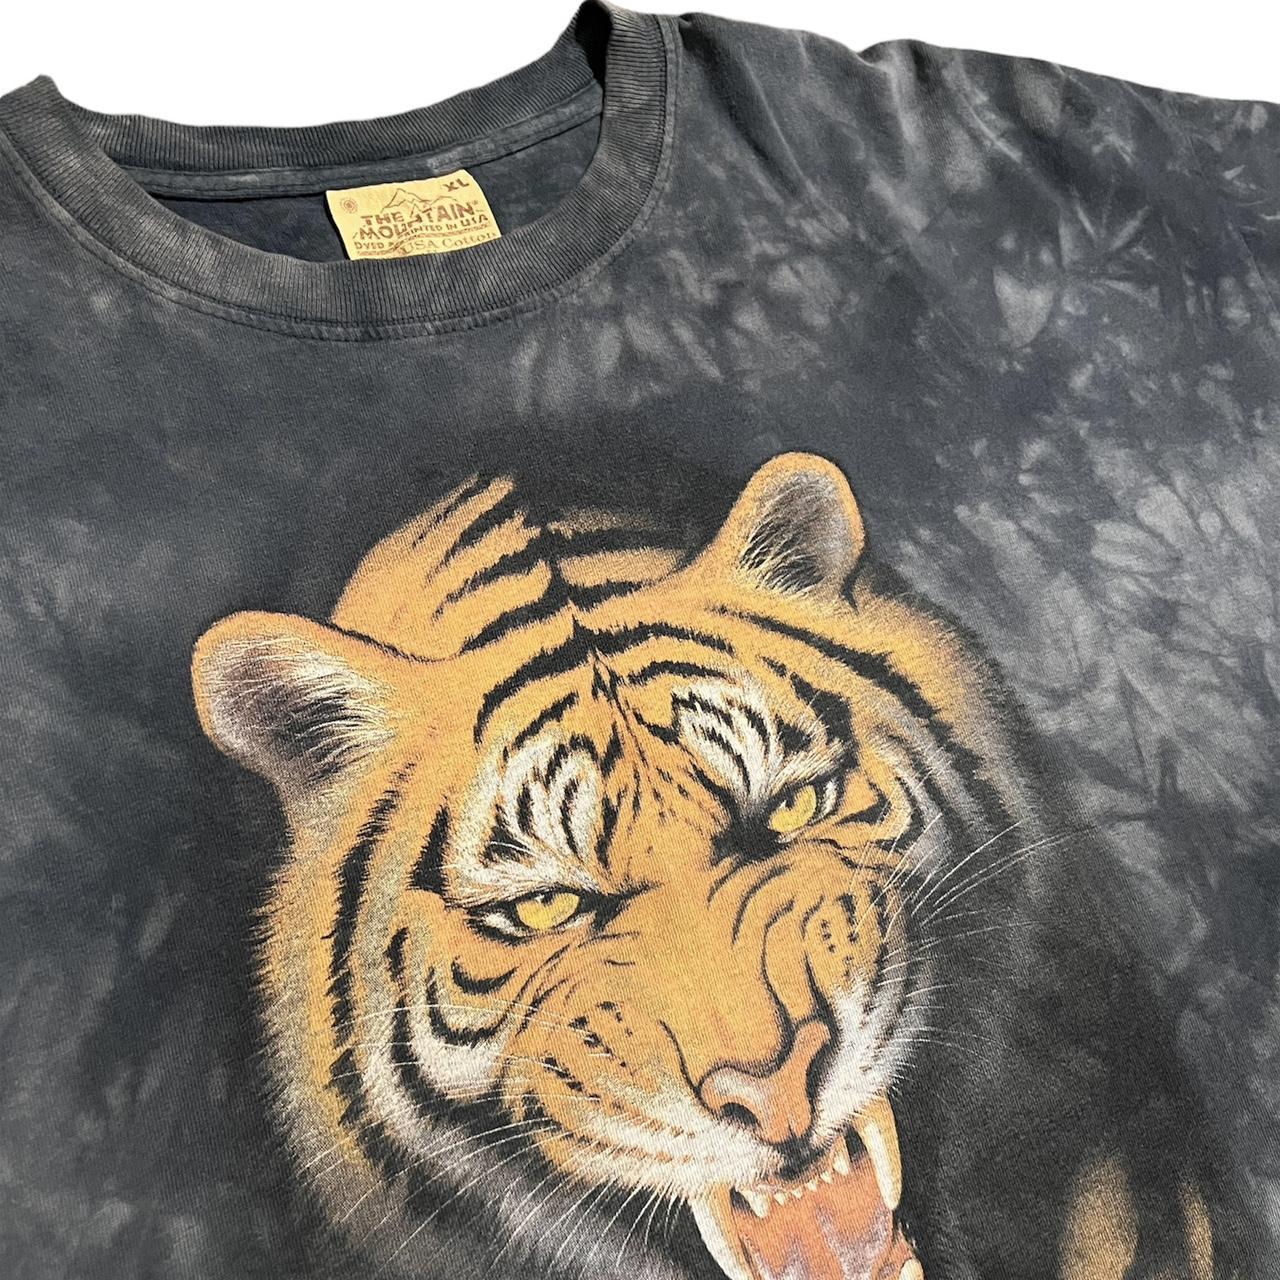 Human Made Tiger t shirt size xl fits like a large - Depop